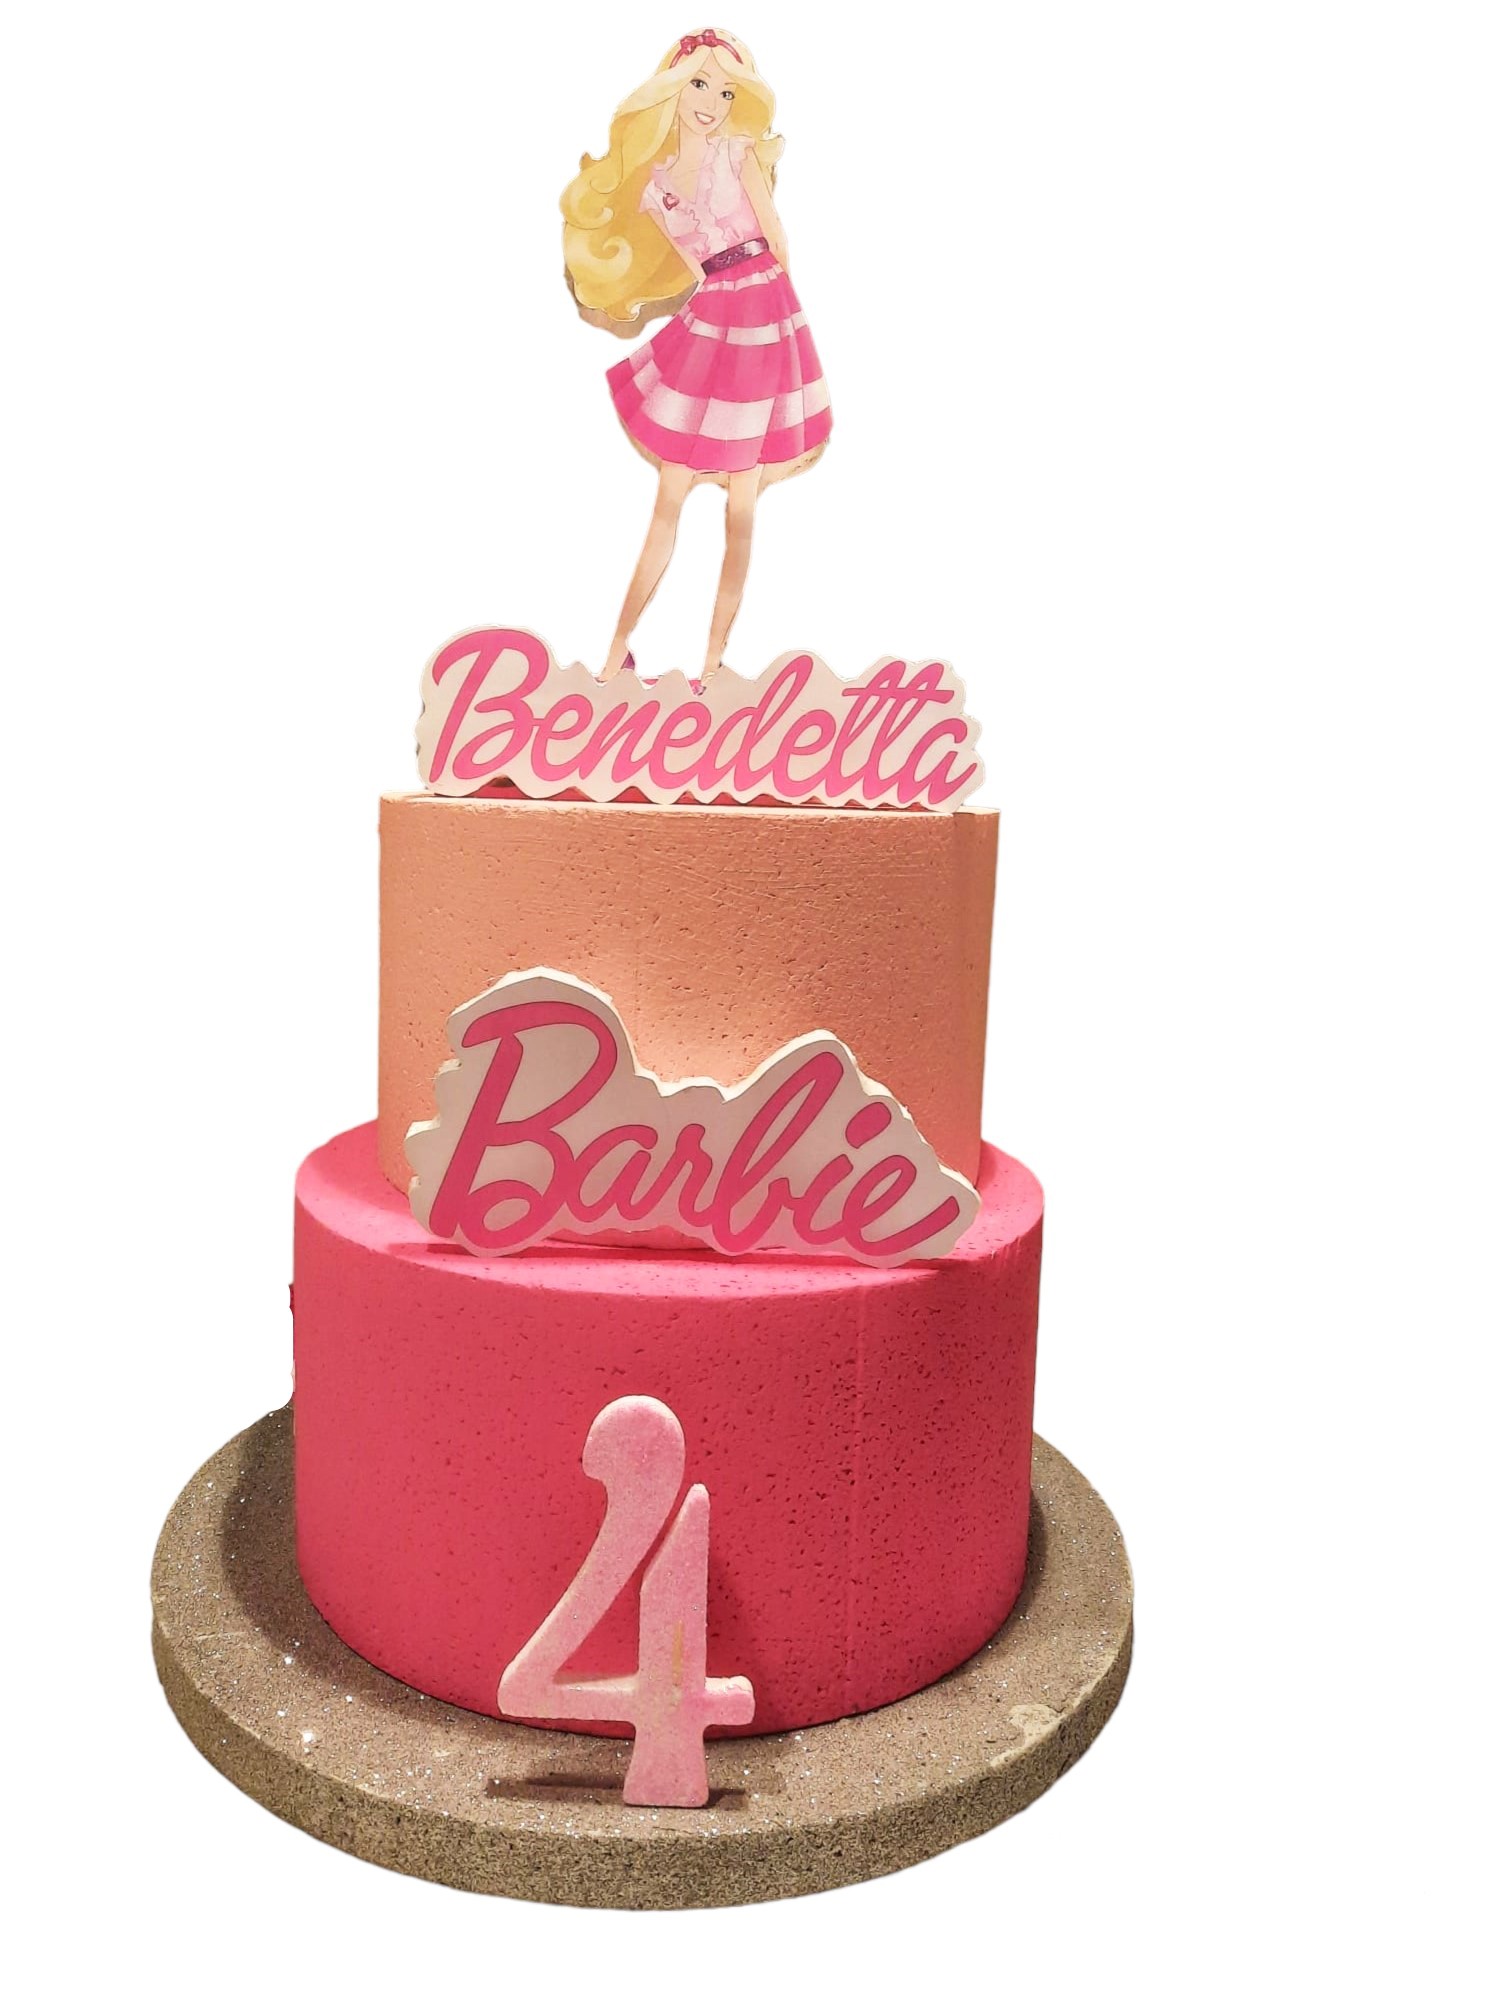 Compleanno a tema Barbie: idee per addobbi 